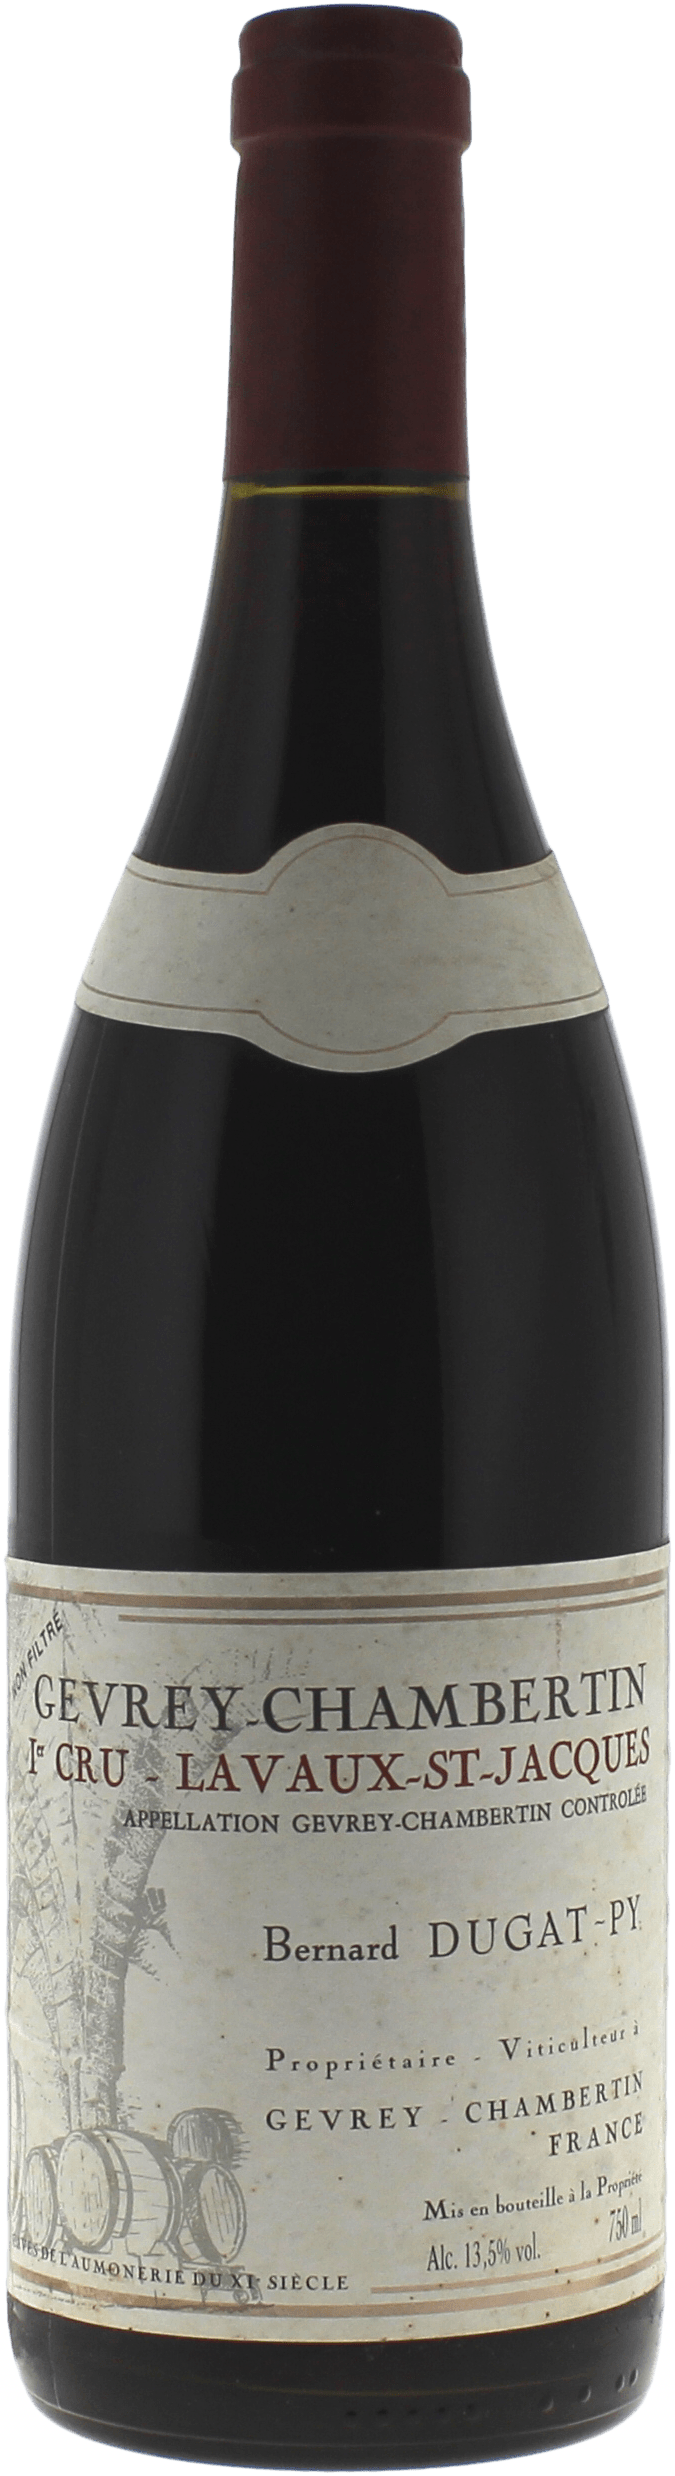 Gevrey chambertin 1er cru lavaux saint jacques 2015 Domaine DUGAT-PY, Bourgogne rouge